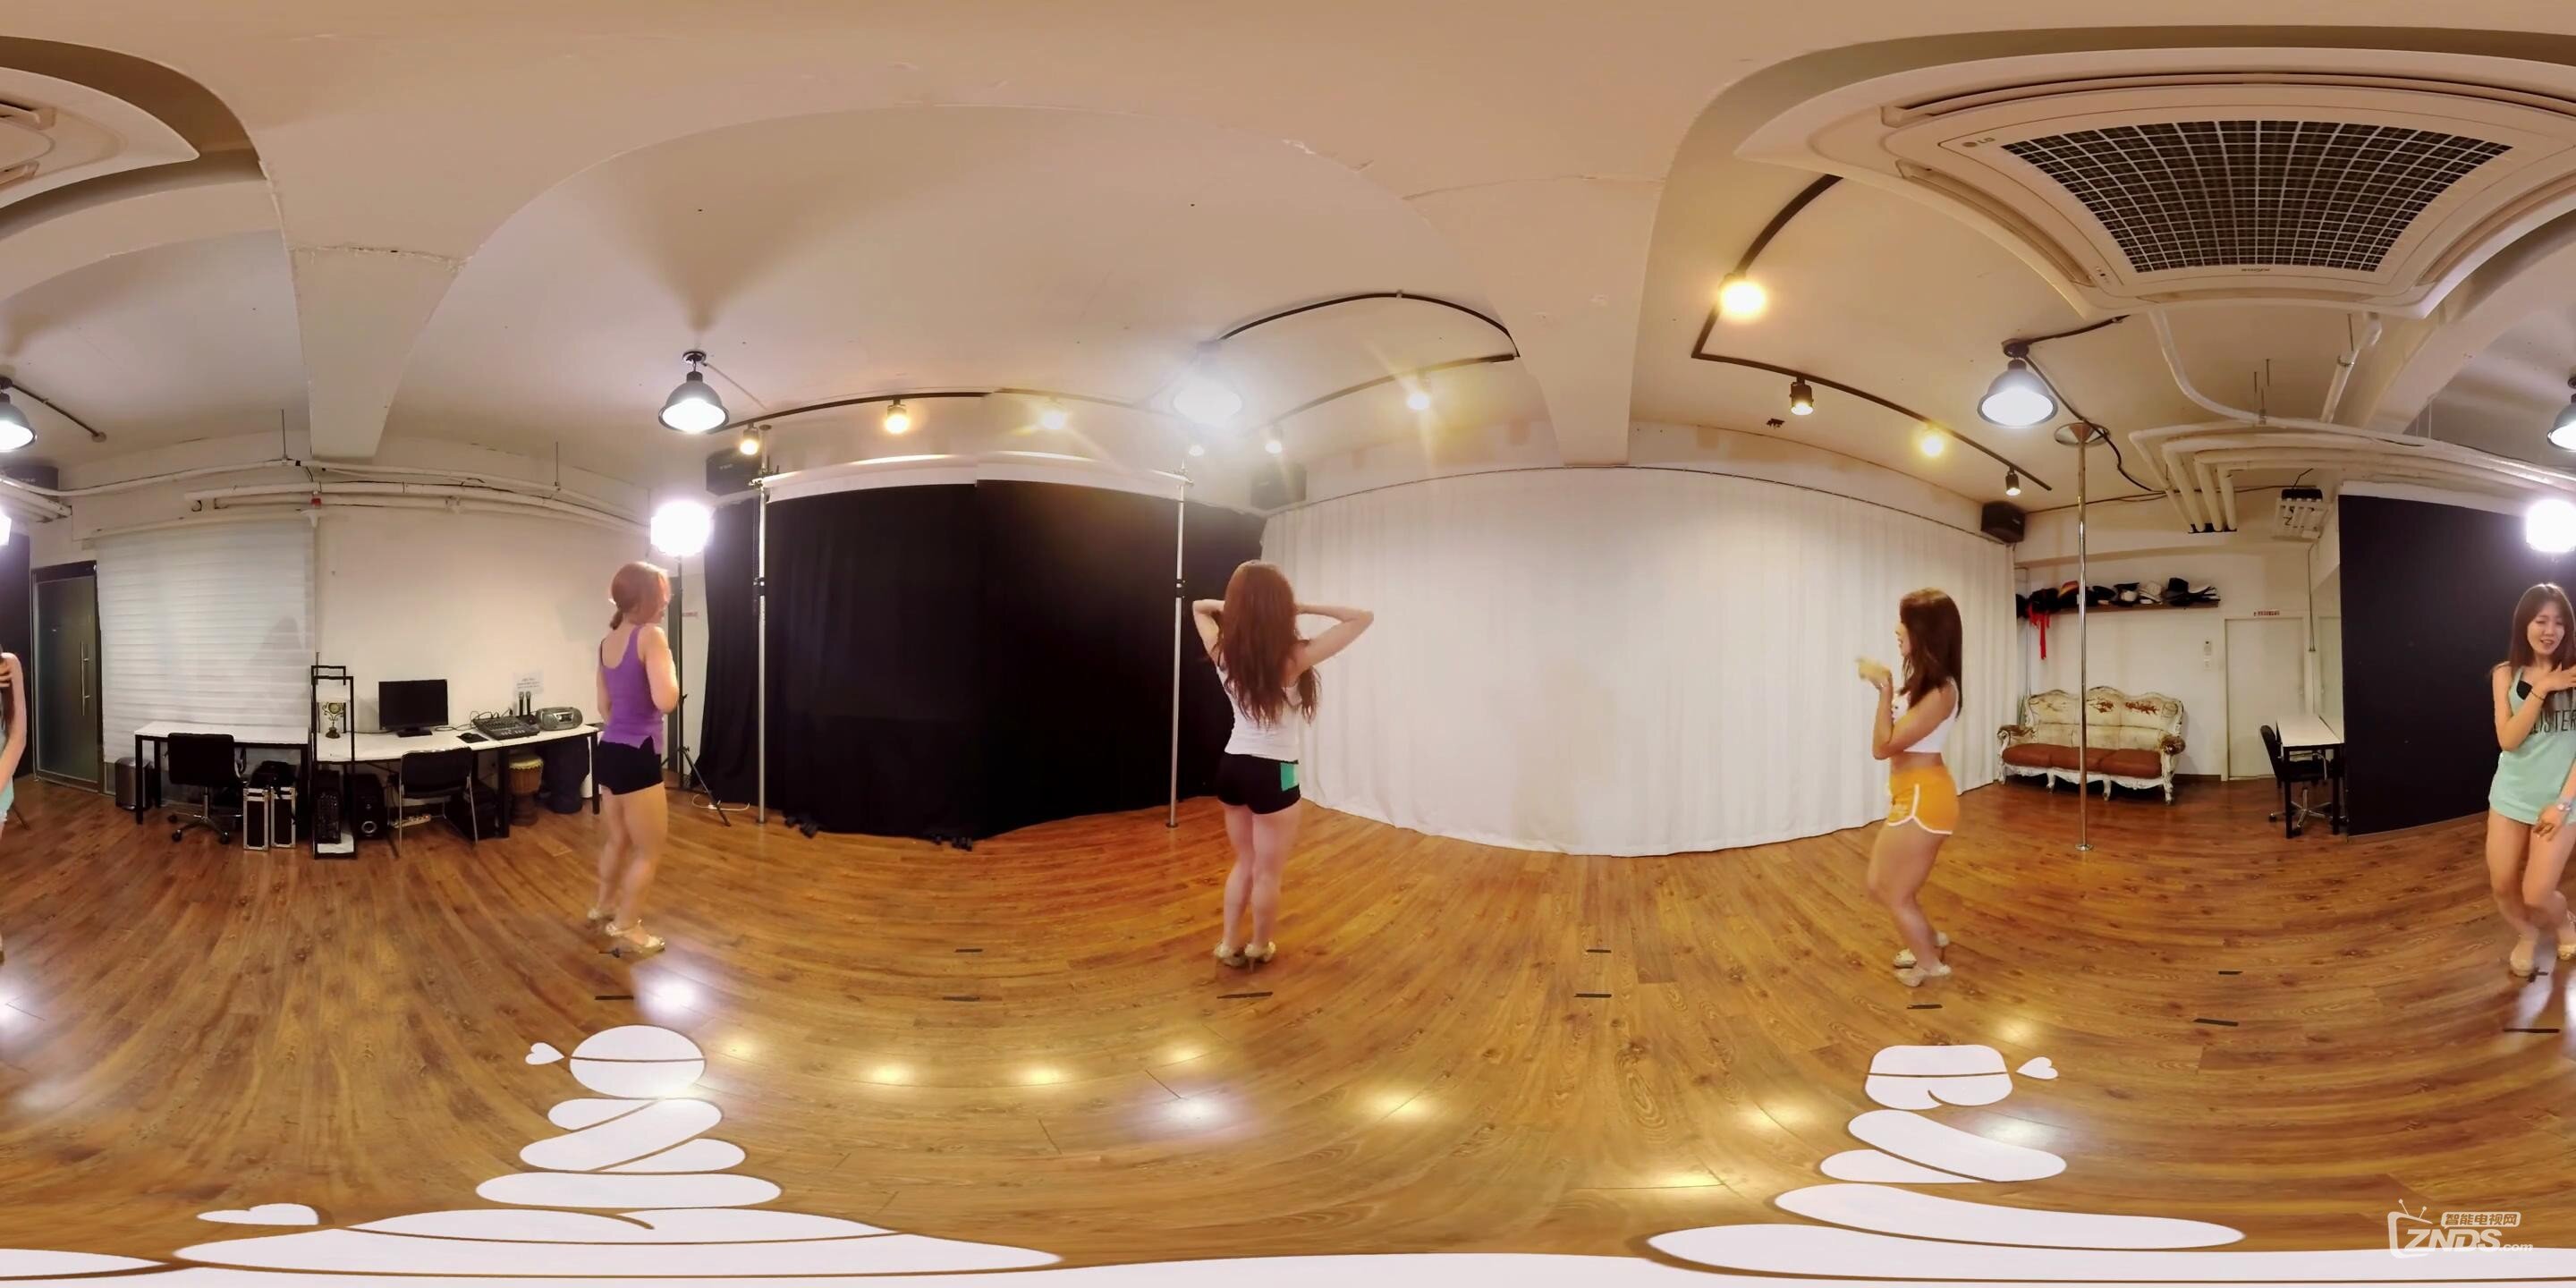 Видео для vr 360 градусов. Танец 360 градусов. VR 360. Фотография девушки 360 градусов обзора.